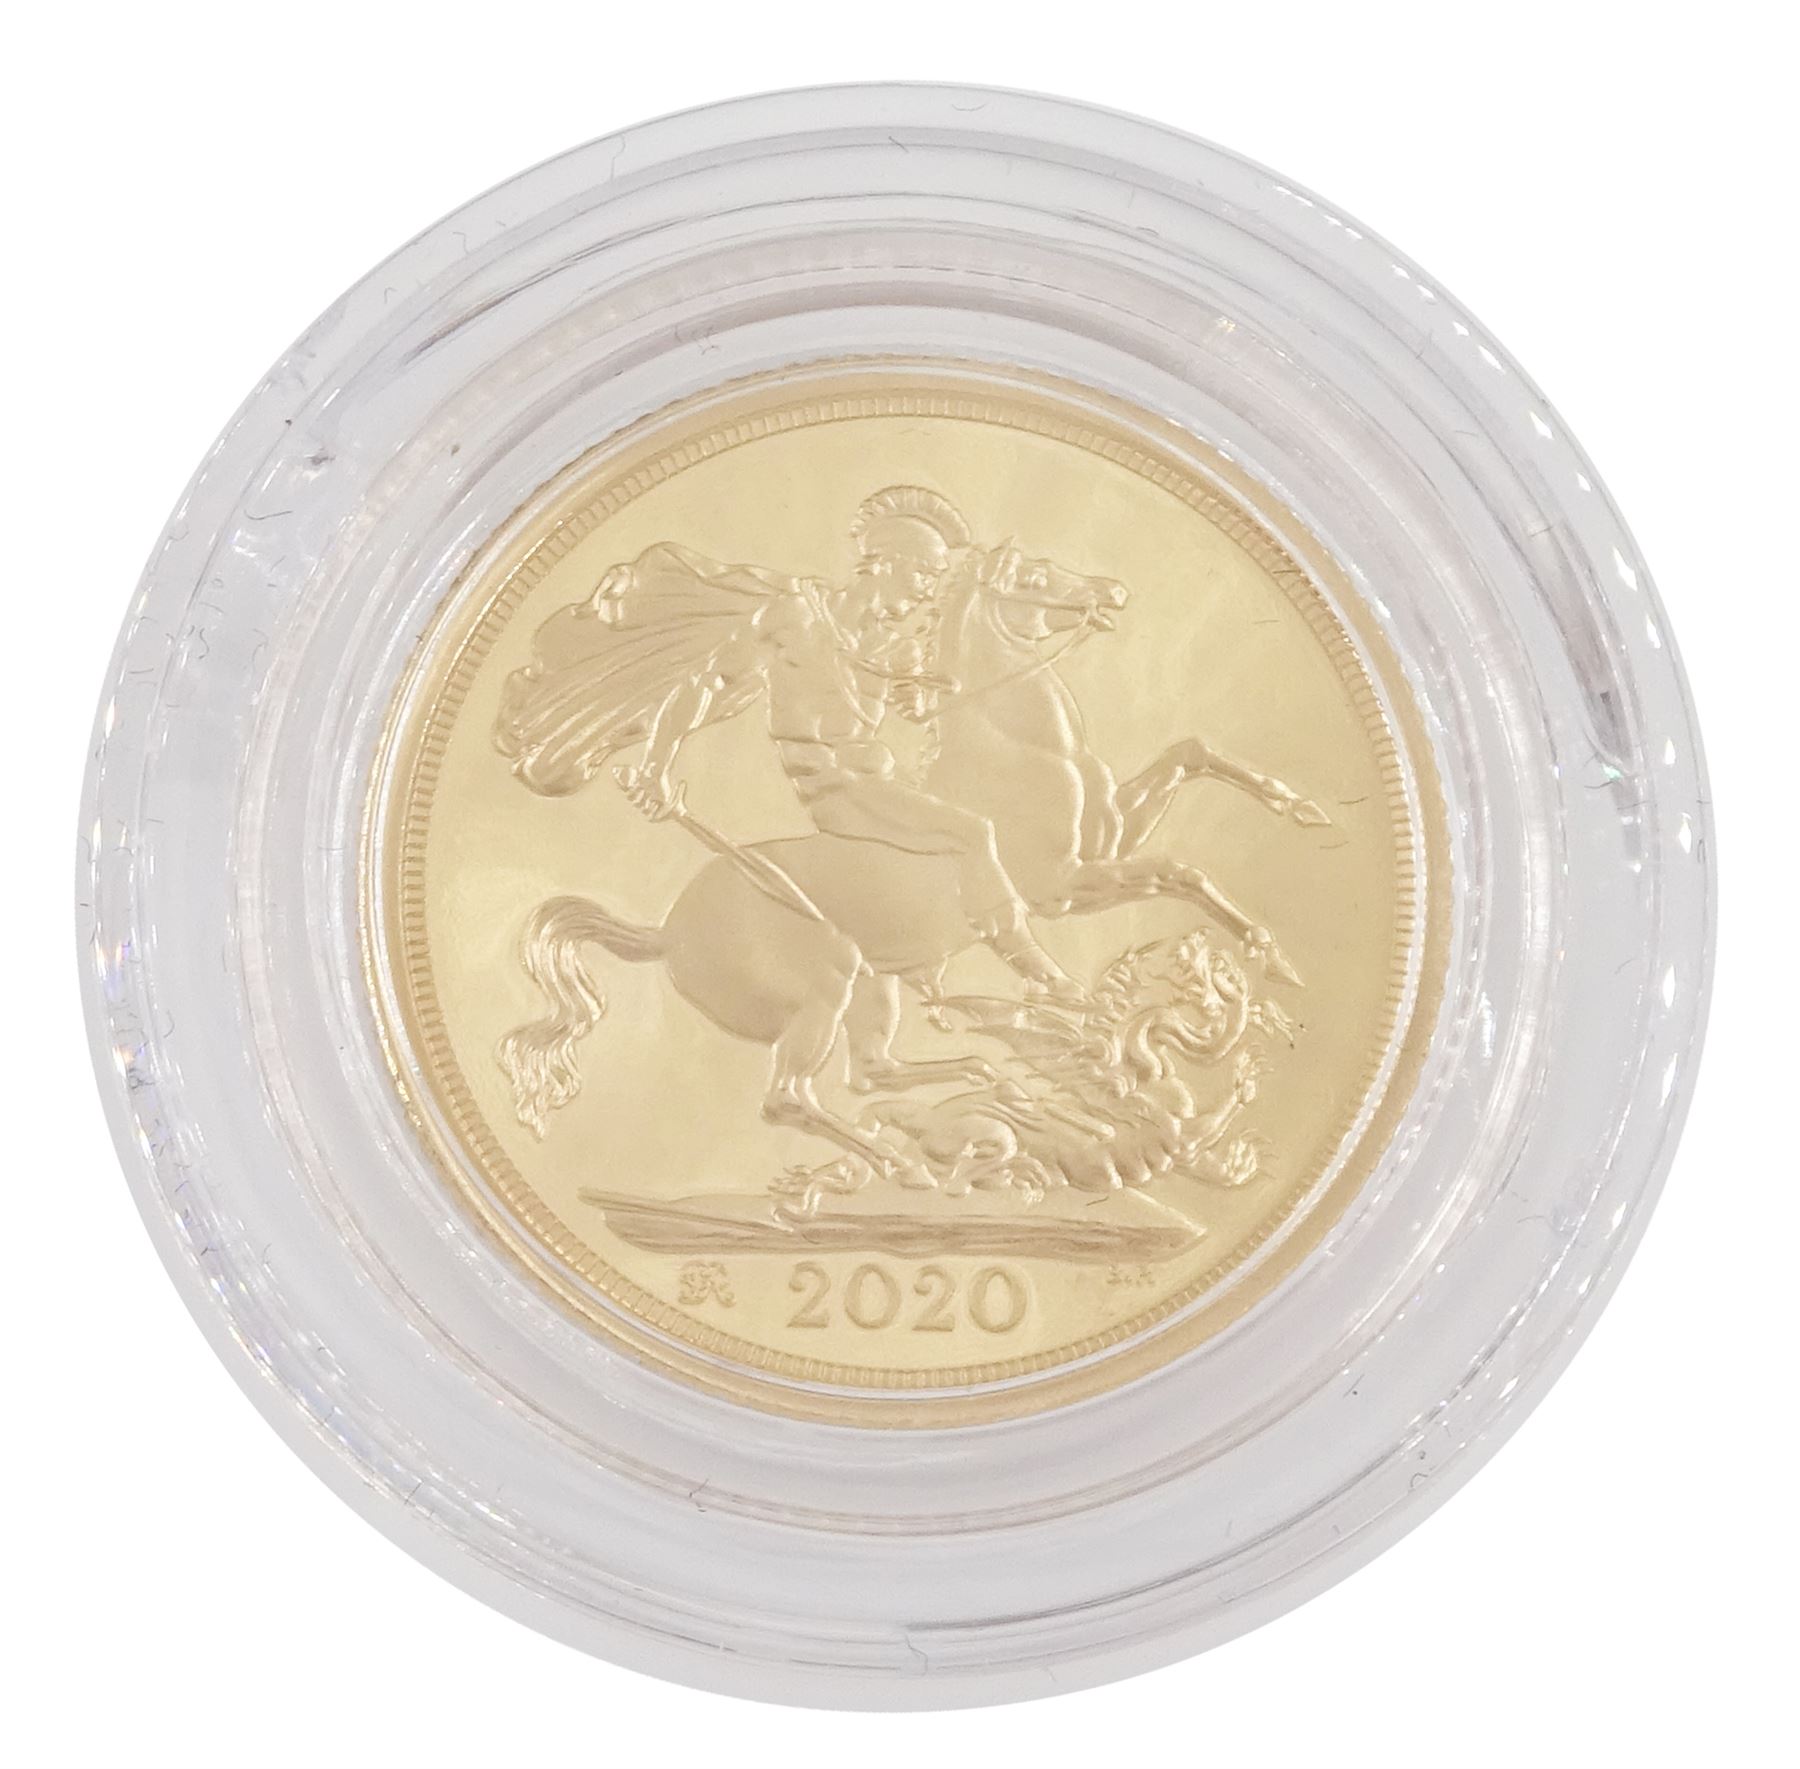 Queen Elizabeth II 2020 gold proof sovereign coin - Image 3 of 3